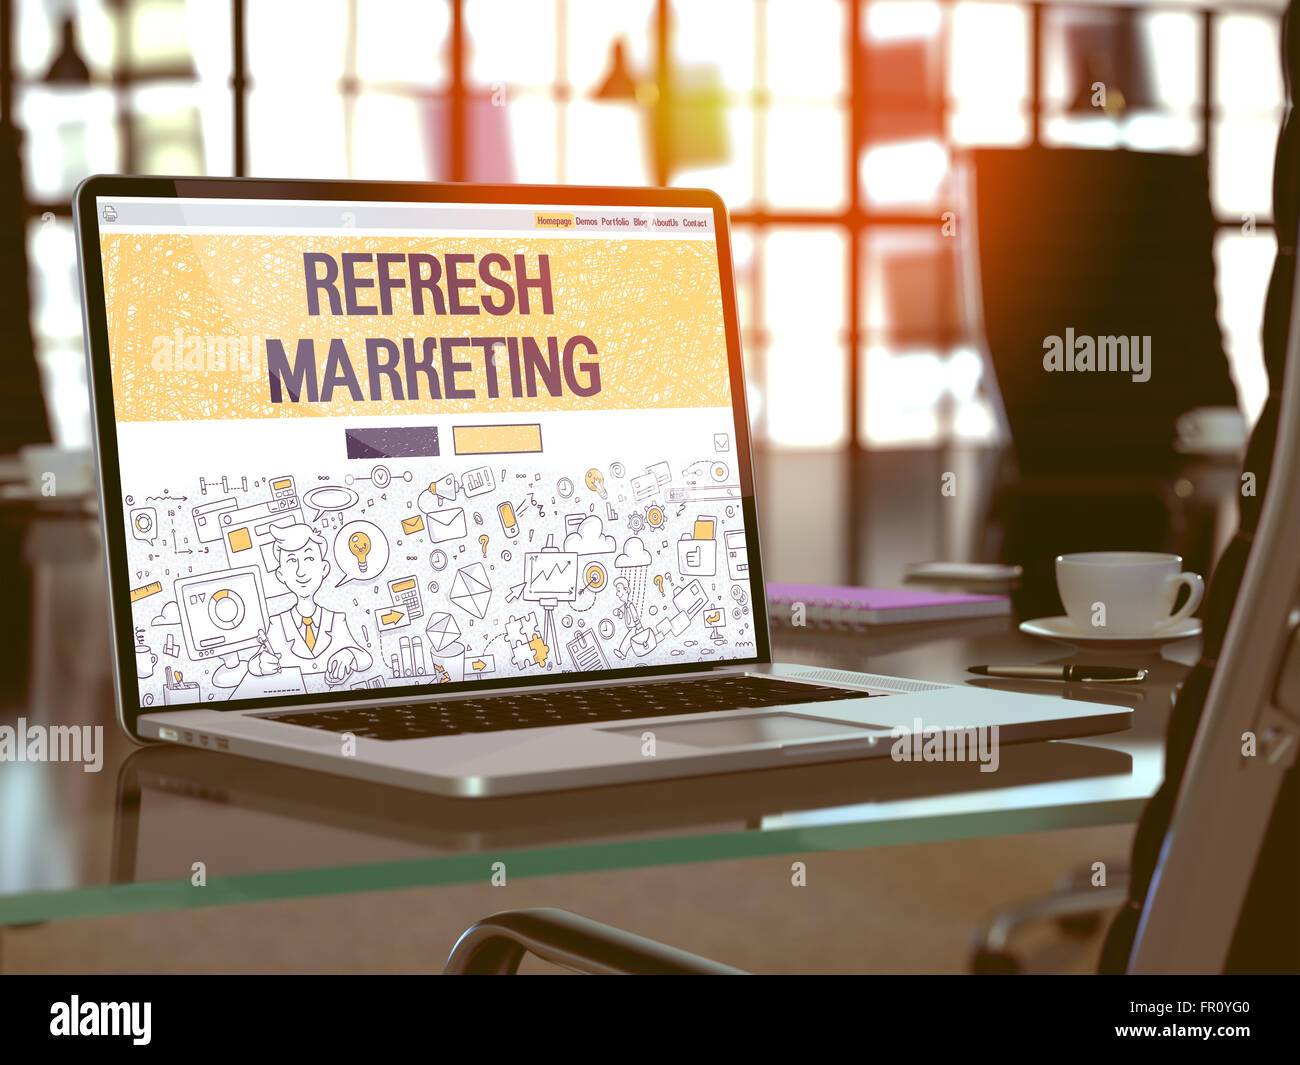 Refresh Marketing Concept on Laptop Screen. Stock Photo